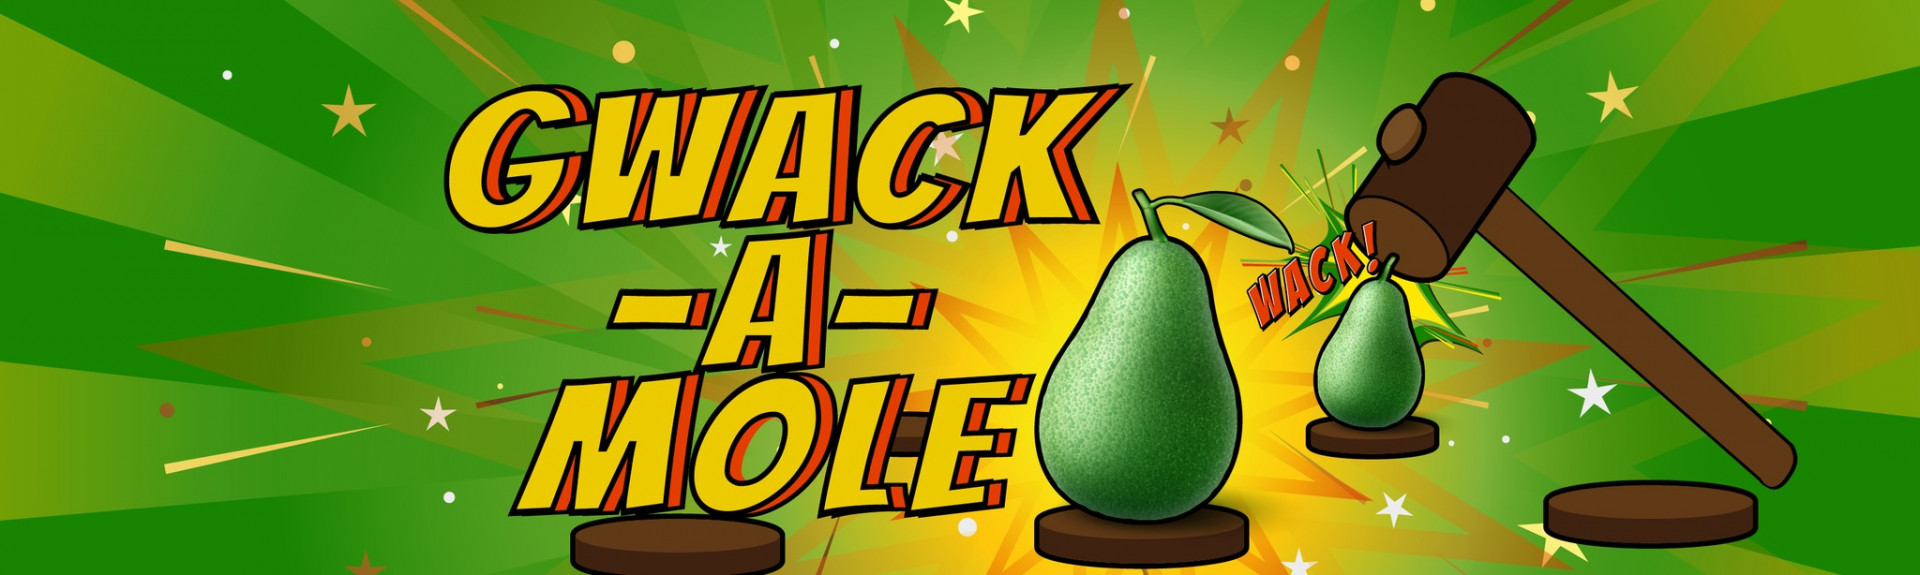 Gwack-a-mole